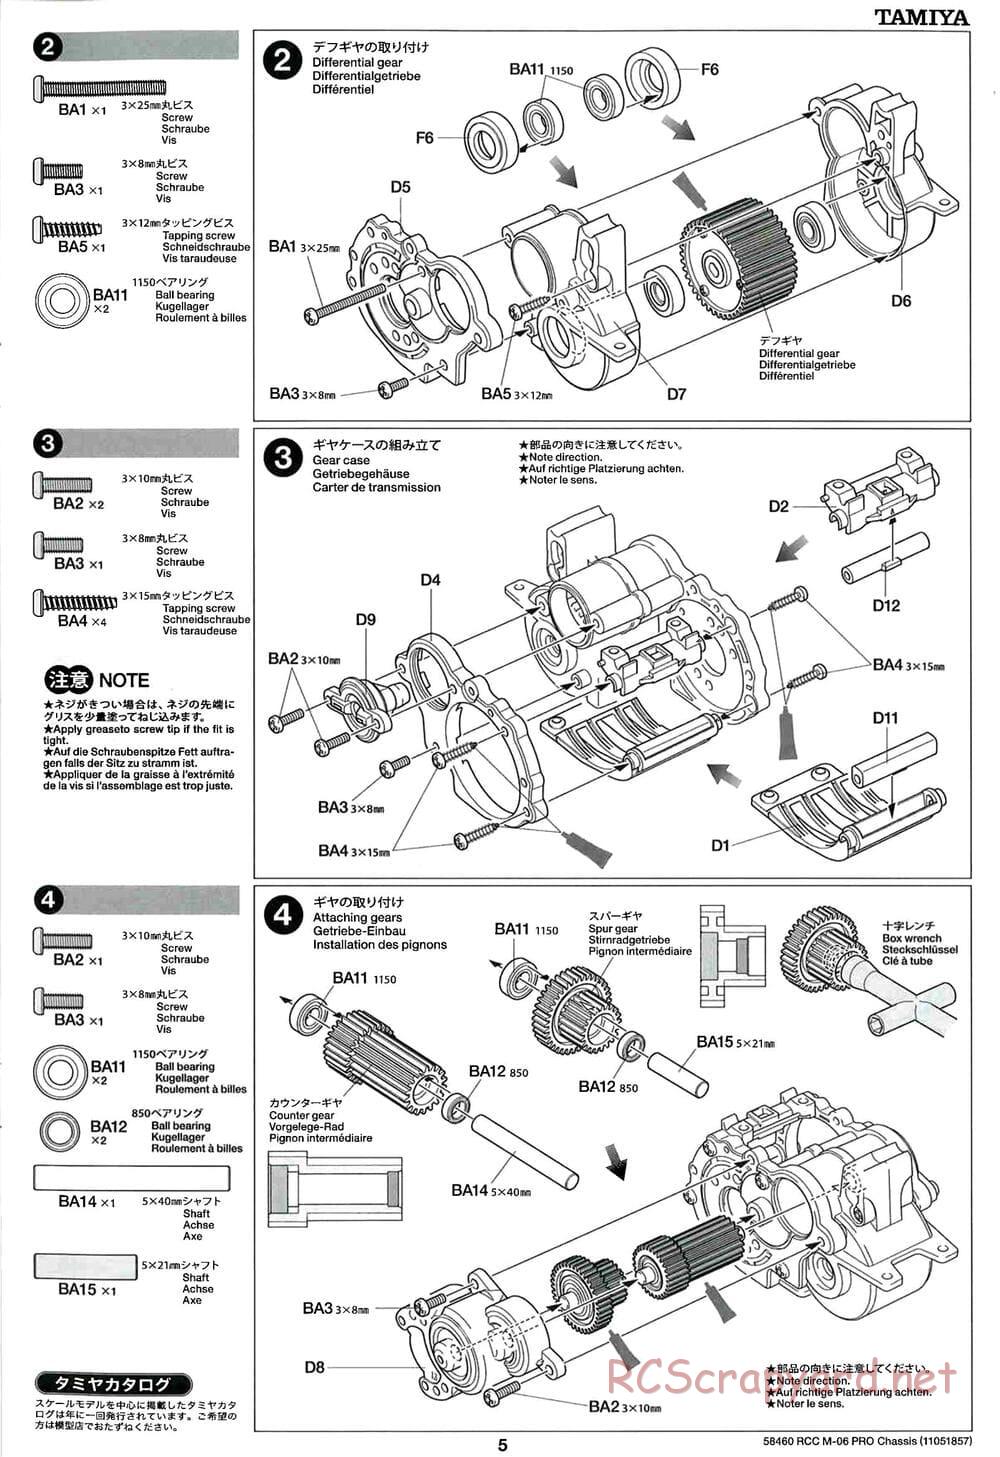 Tamiya - M-06 Pro Chassis - Manual - Page 5